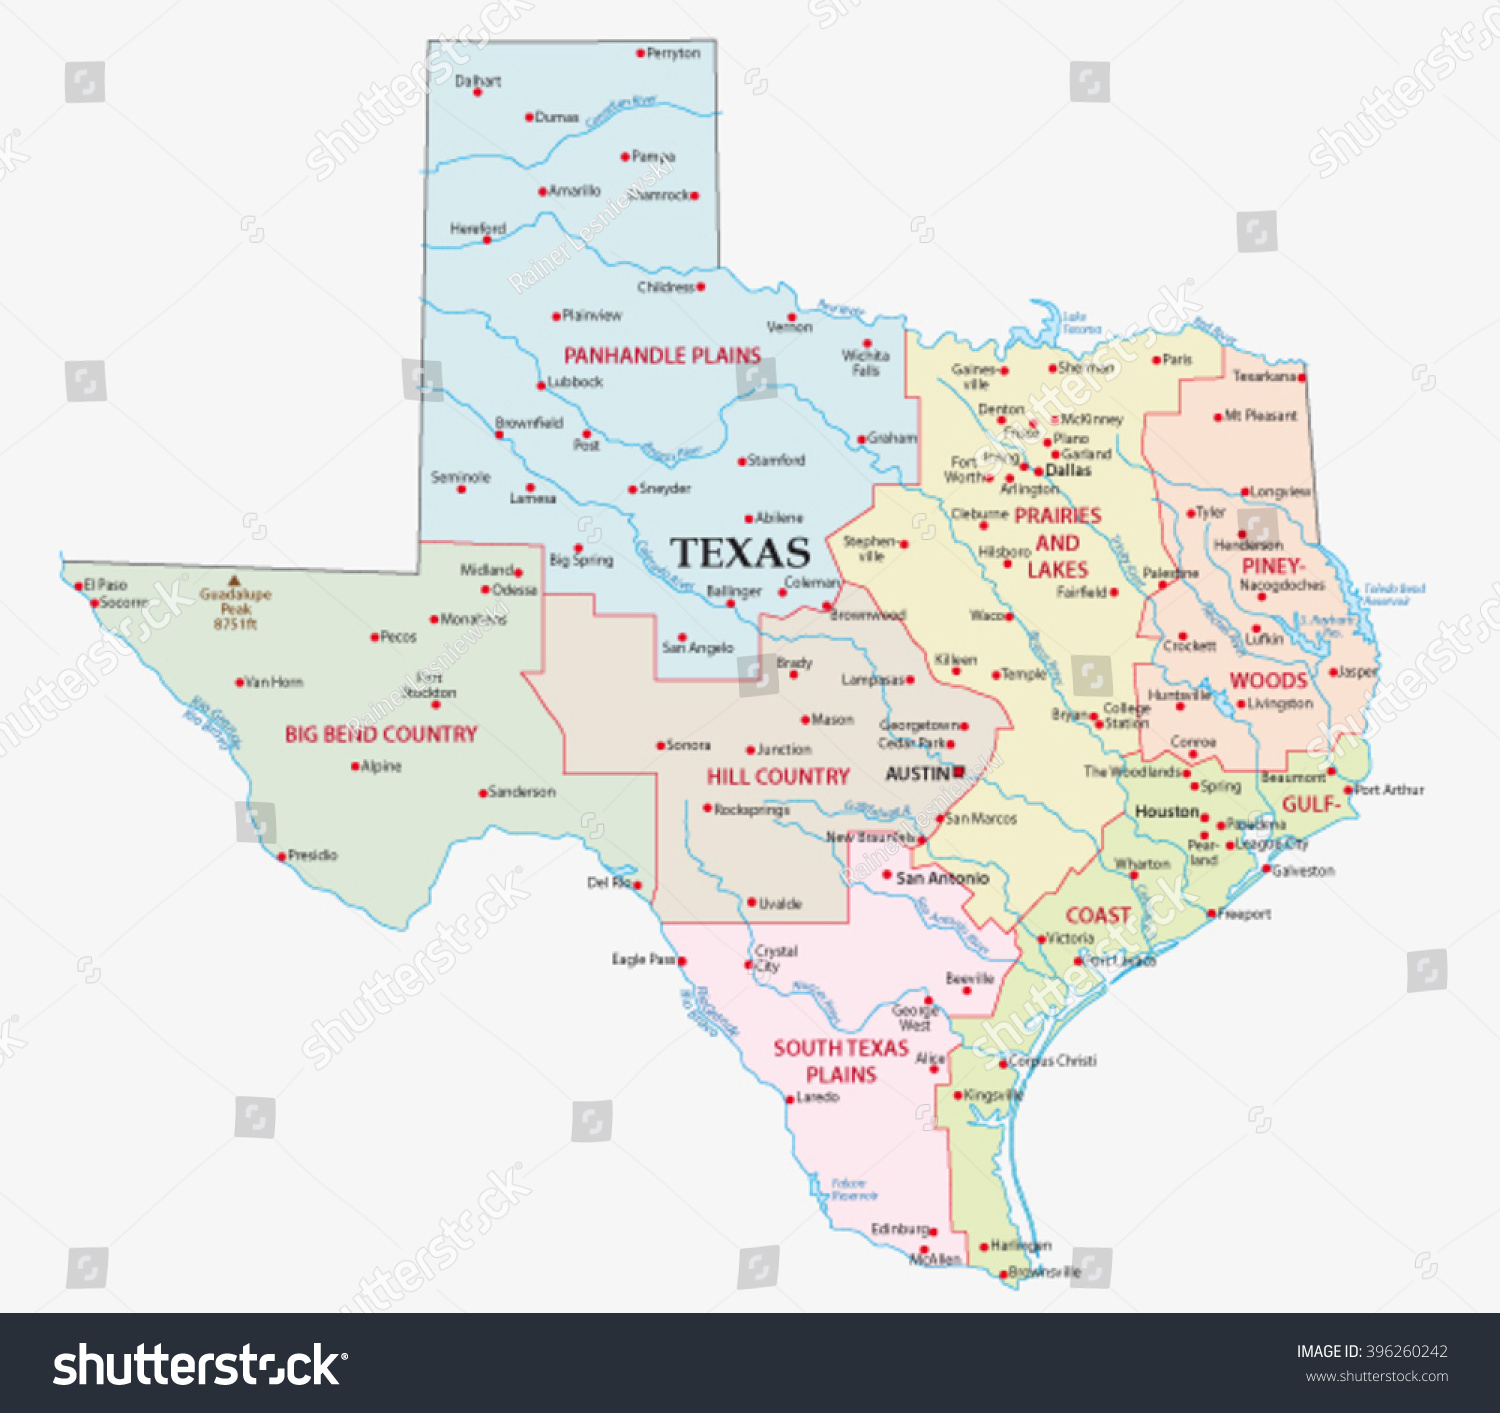 3,421 Regions texas map Images, Stock Photos & Vectors | Shutterstock